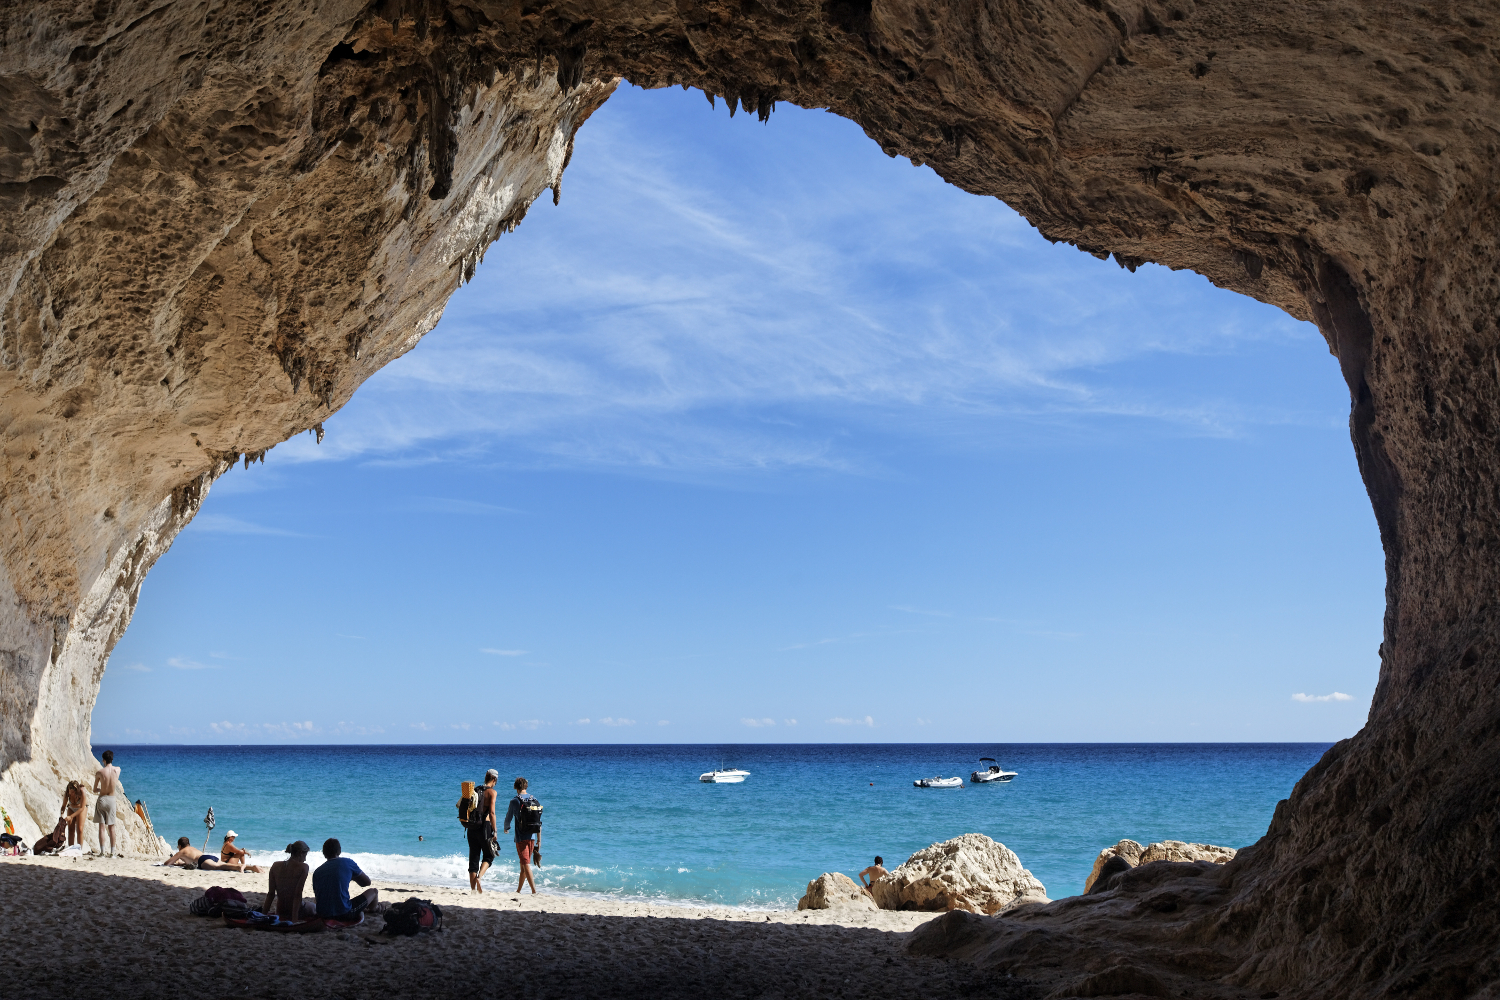 Beach-side cave at Cala Luna